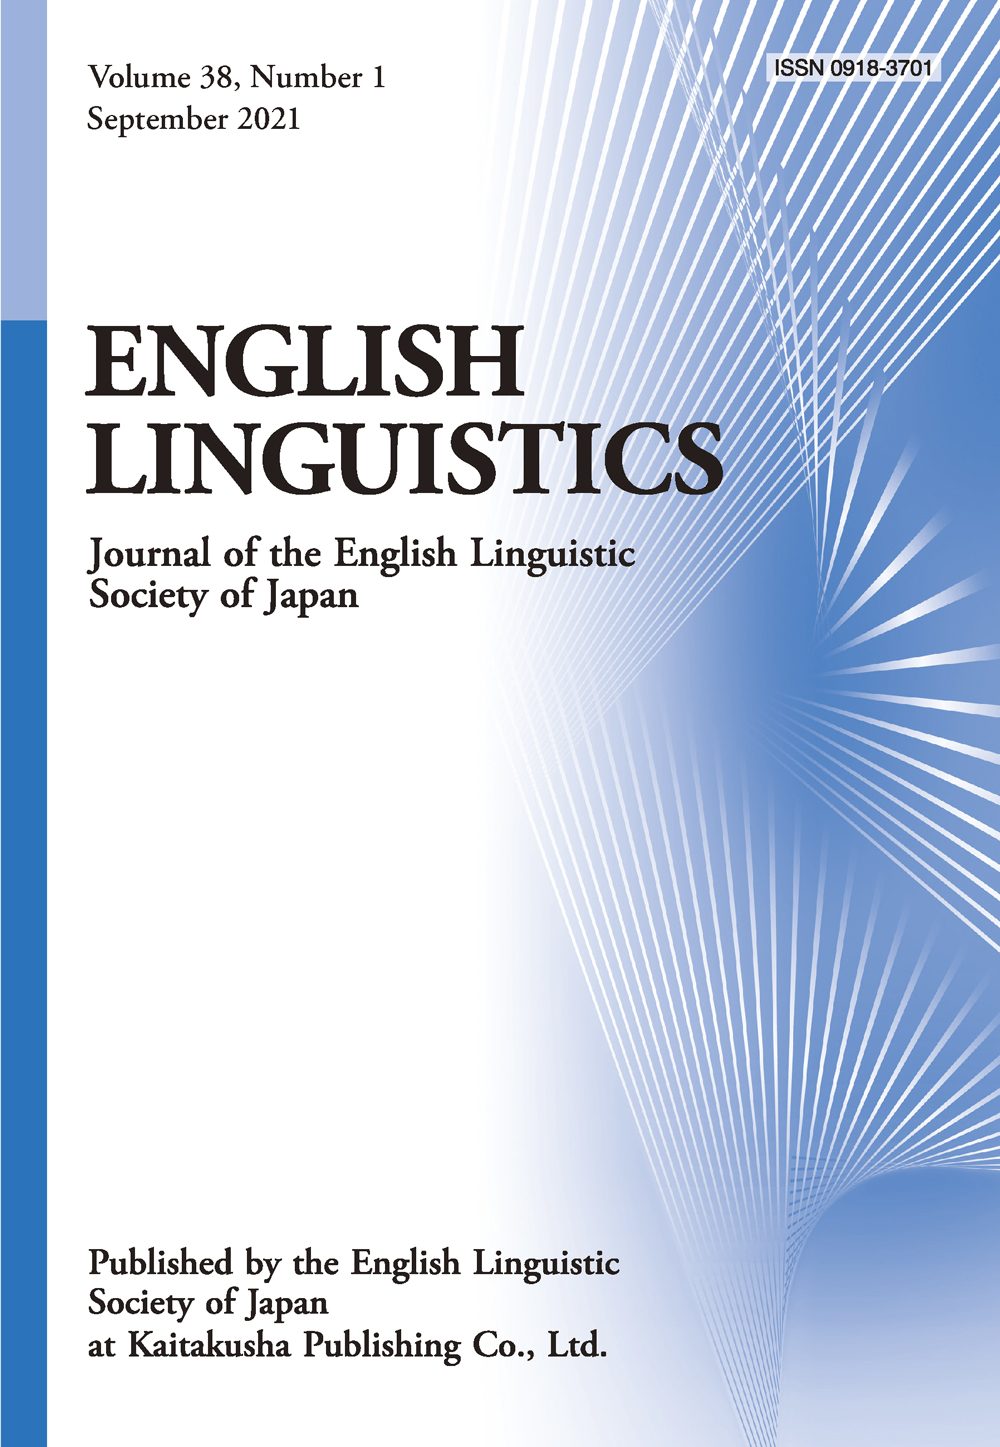 English Linguistics, Volume 38, Number 1 September 2021の商品画像